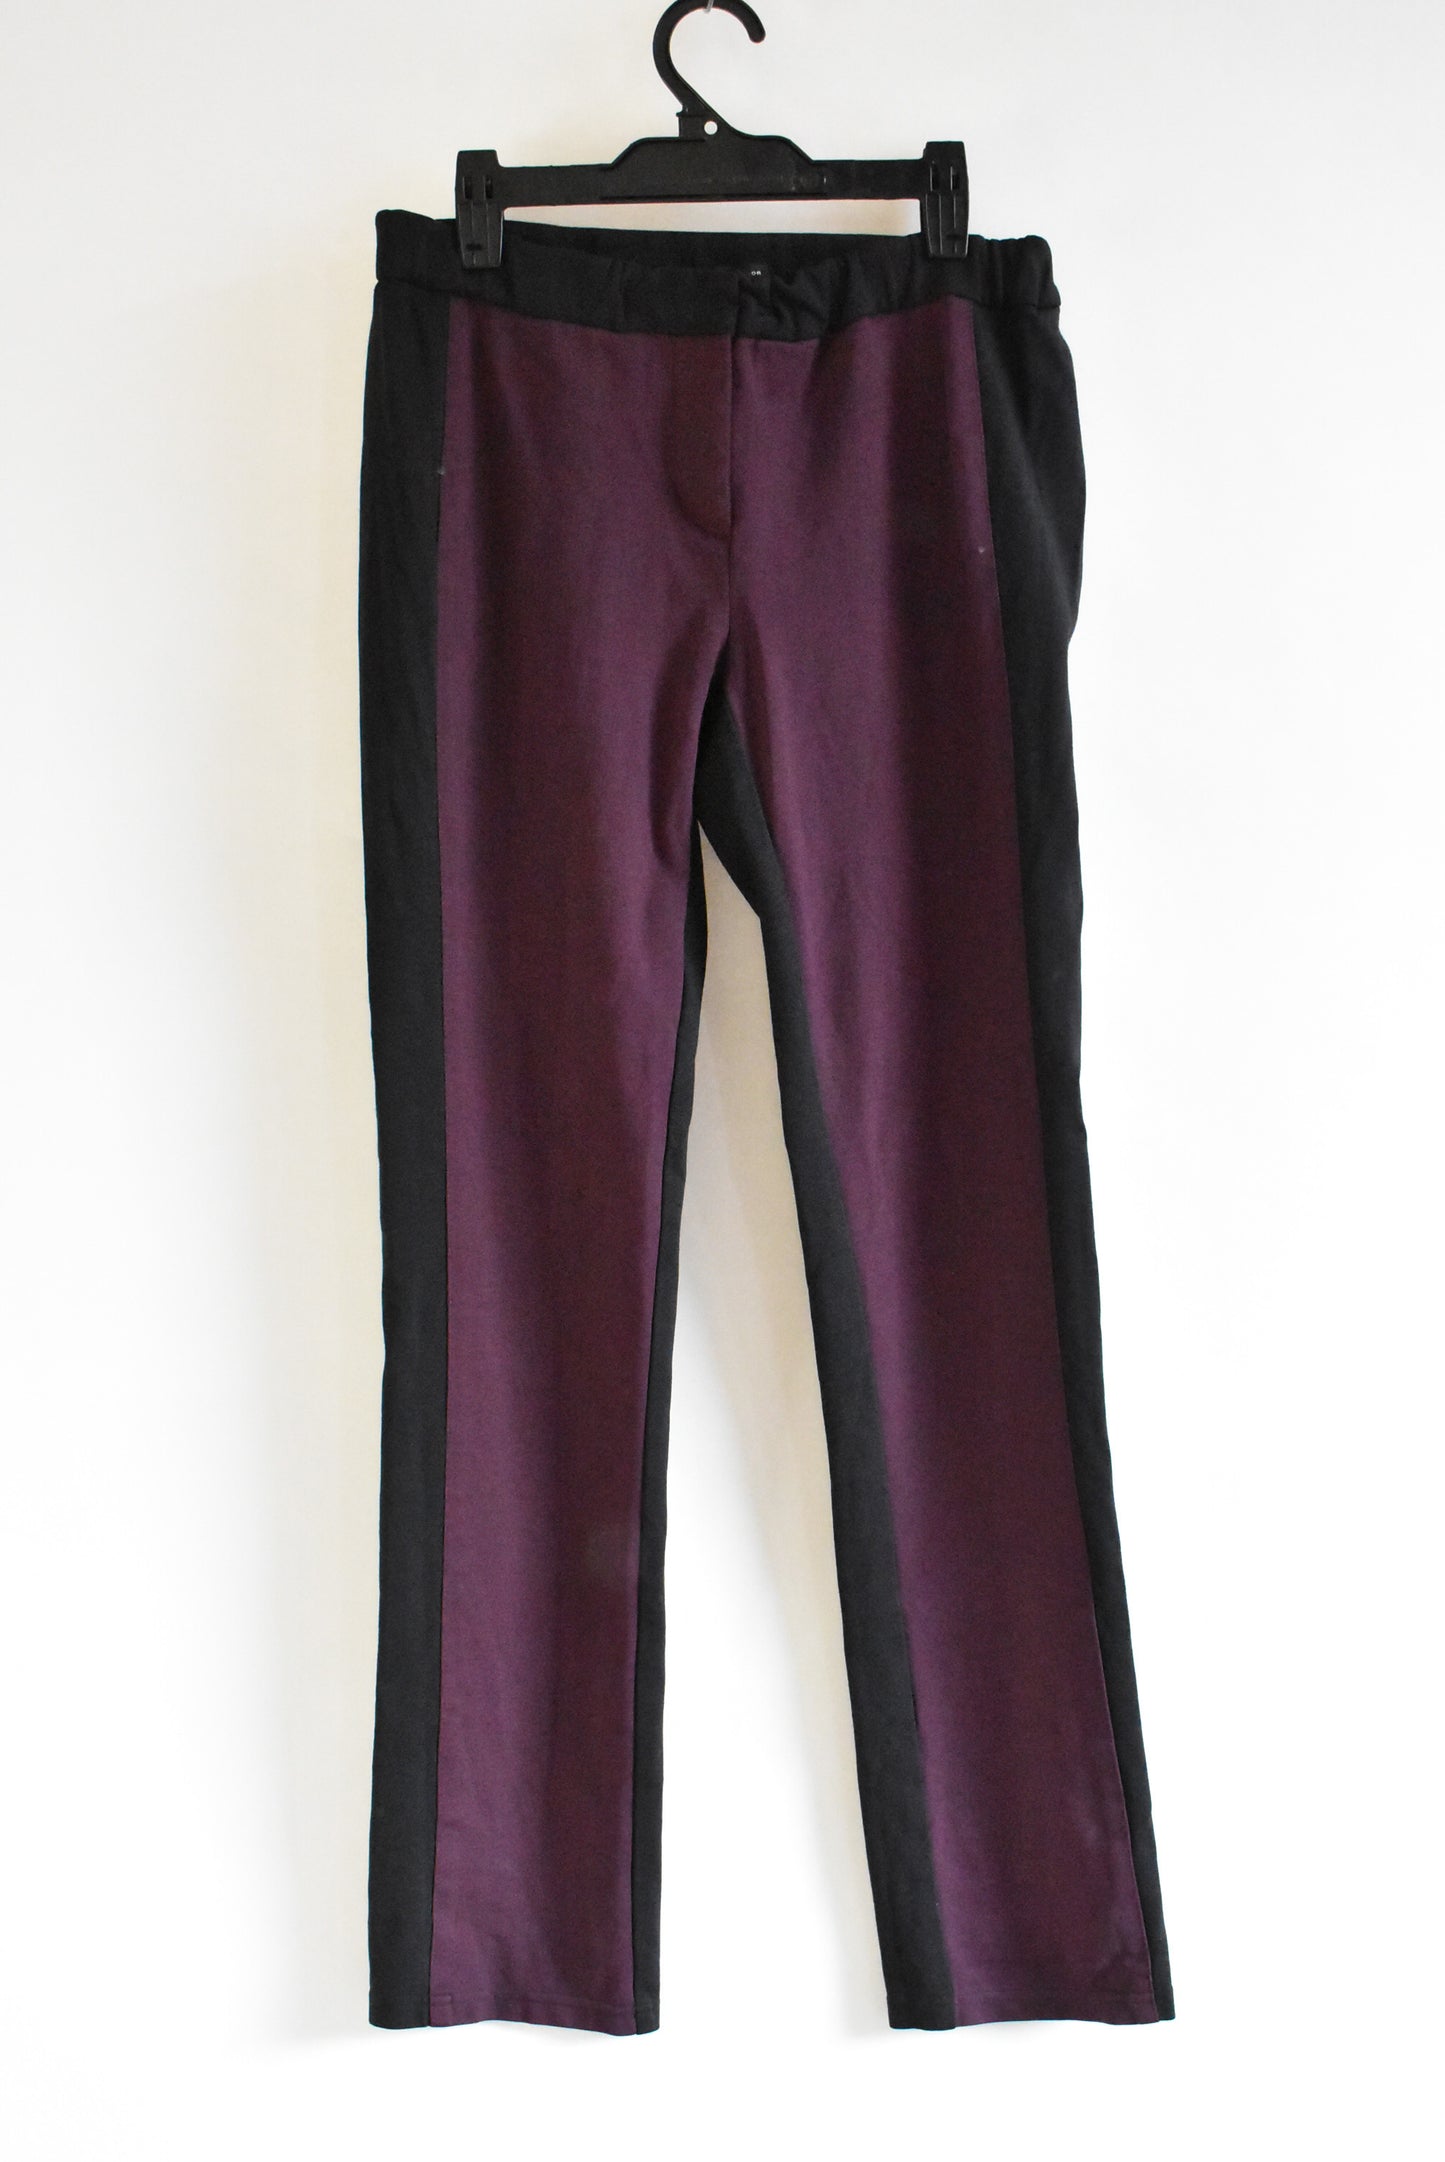 Ann Taylor, Black and maroon dress pants, 10